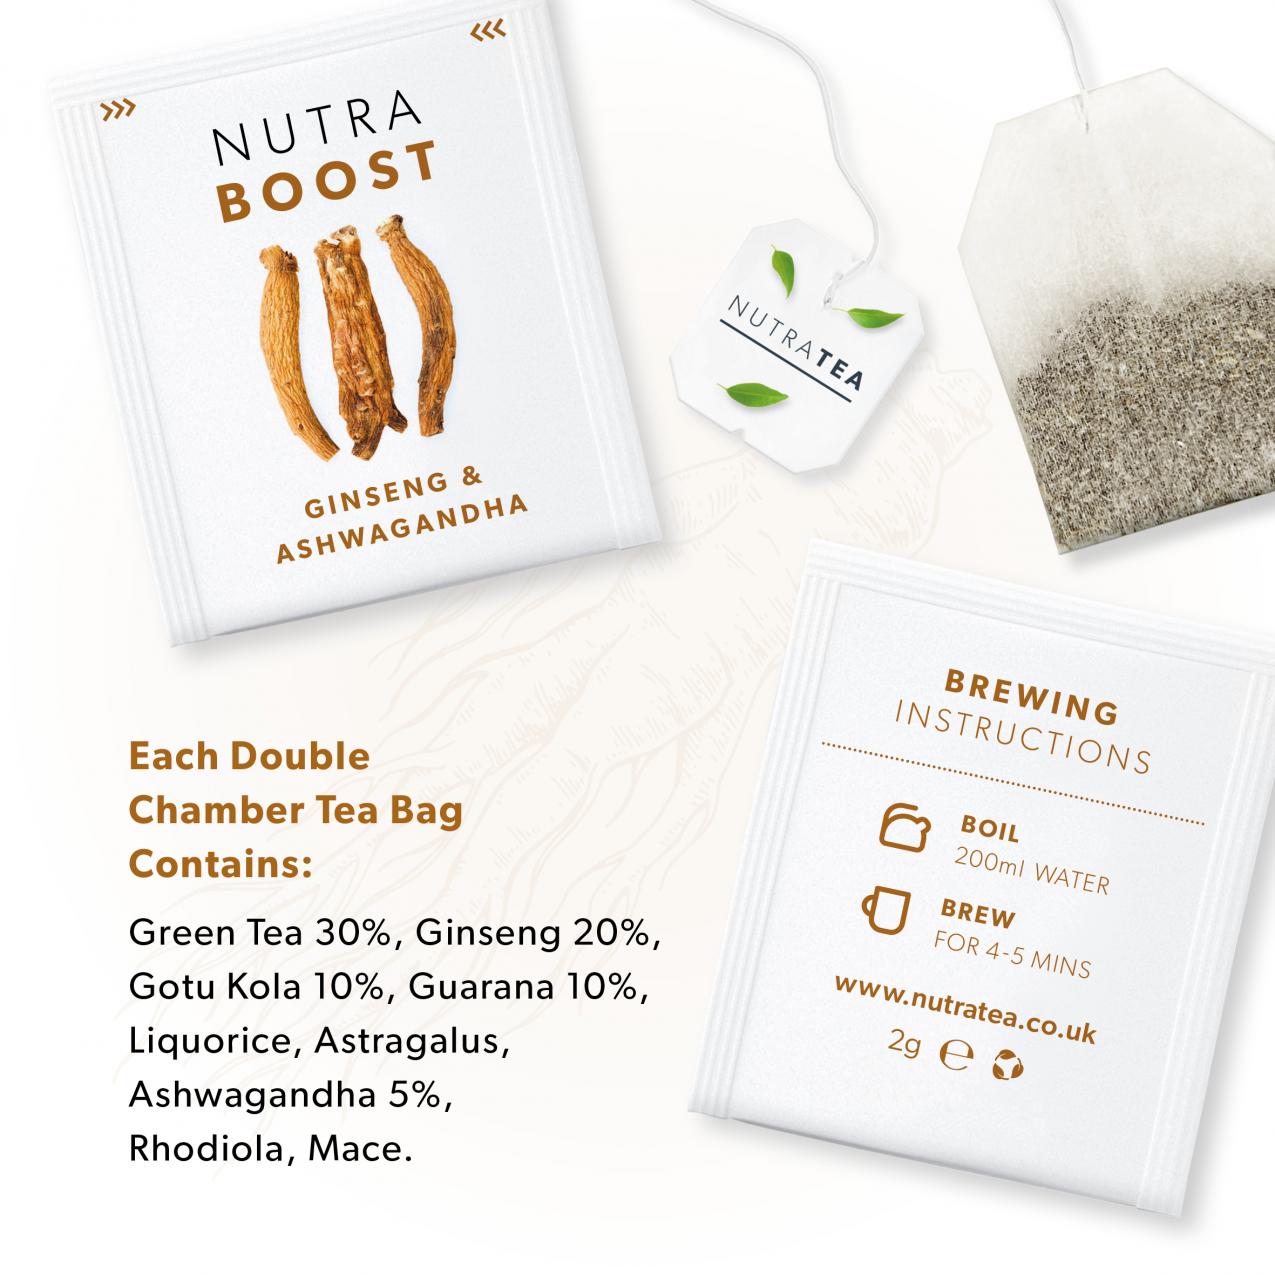 Nutratea Nutra Boost Tea Bags 20's